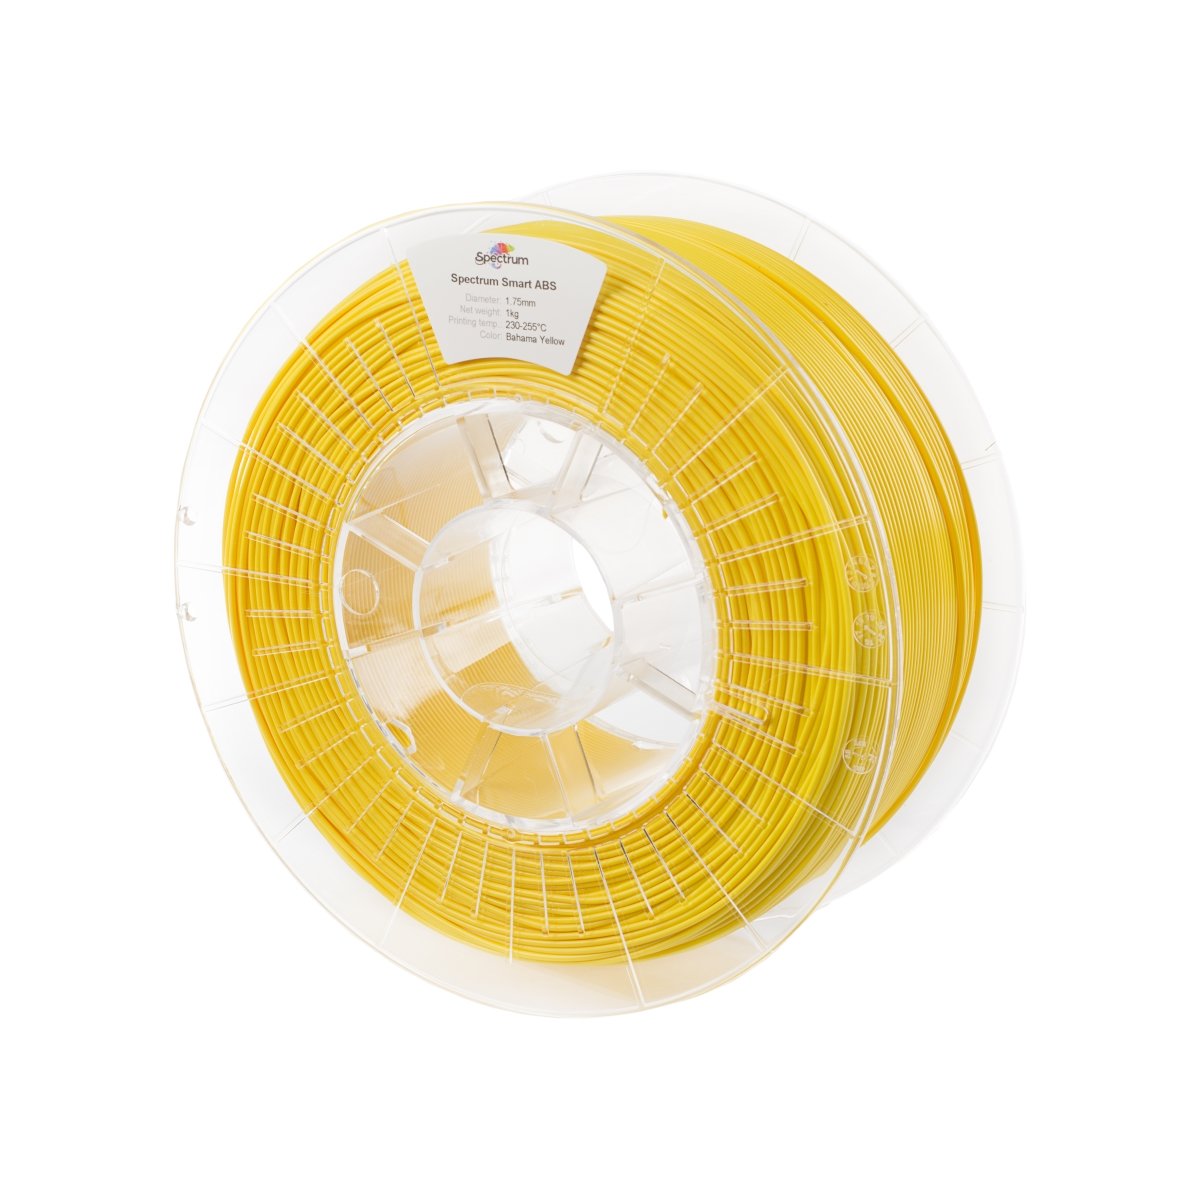 Køb Spectrum Filaments - Smart ABS - 1.75mm - Bahama Yellow - 1 kg - Pris 180.00 kr.